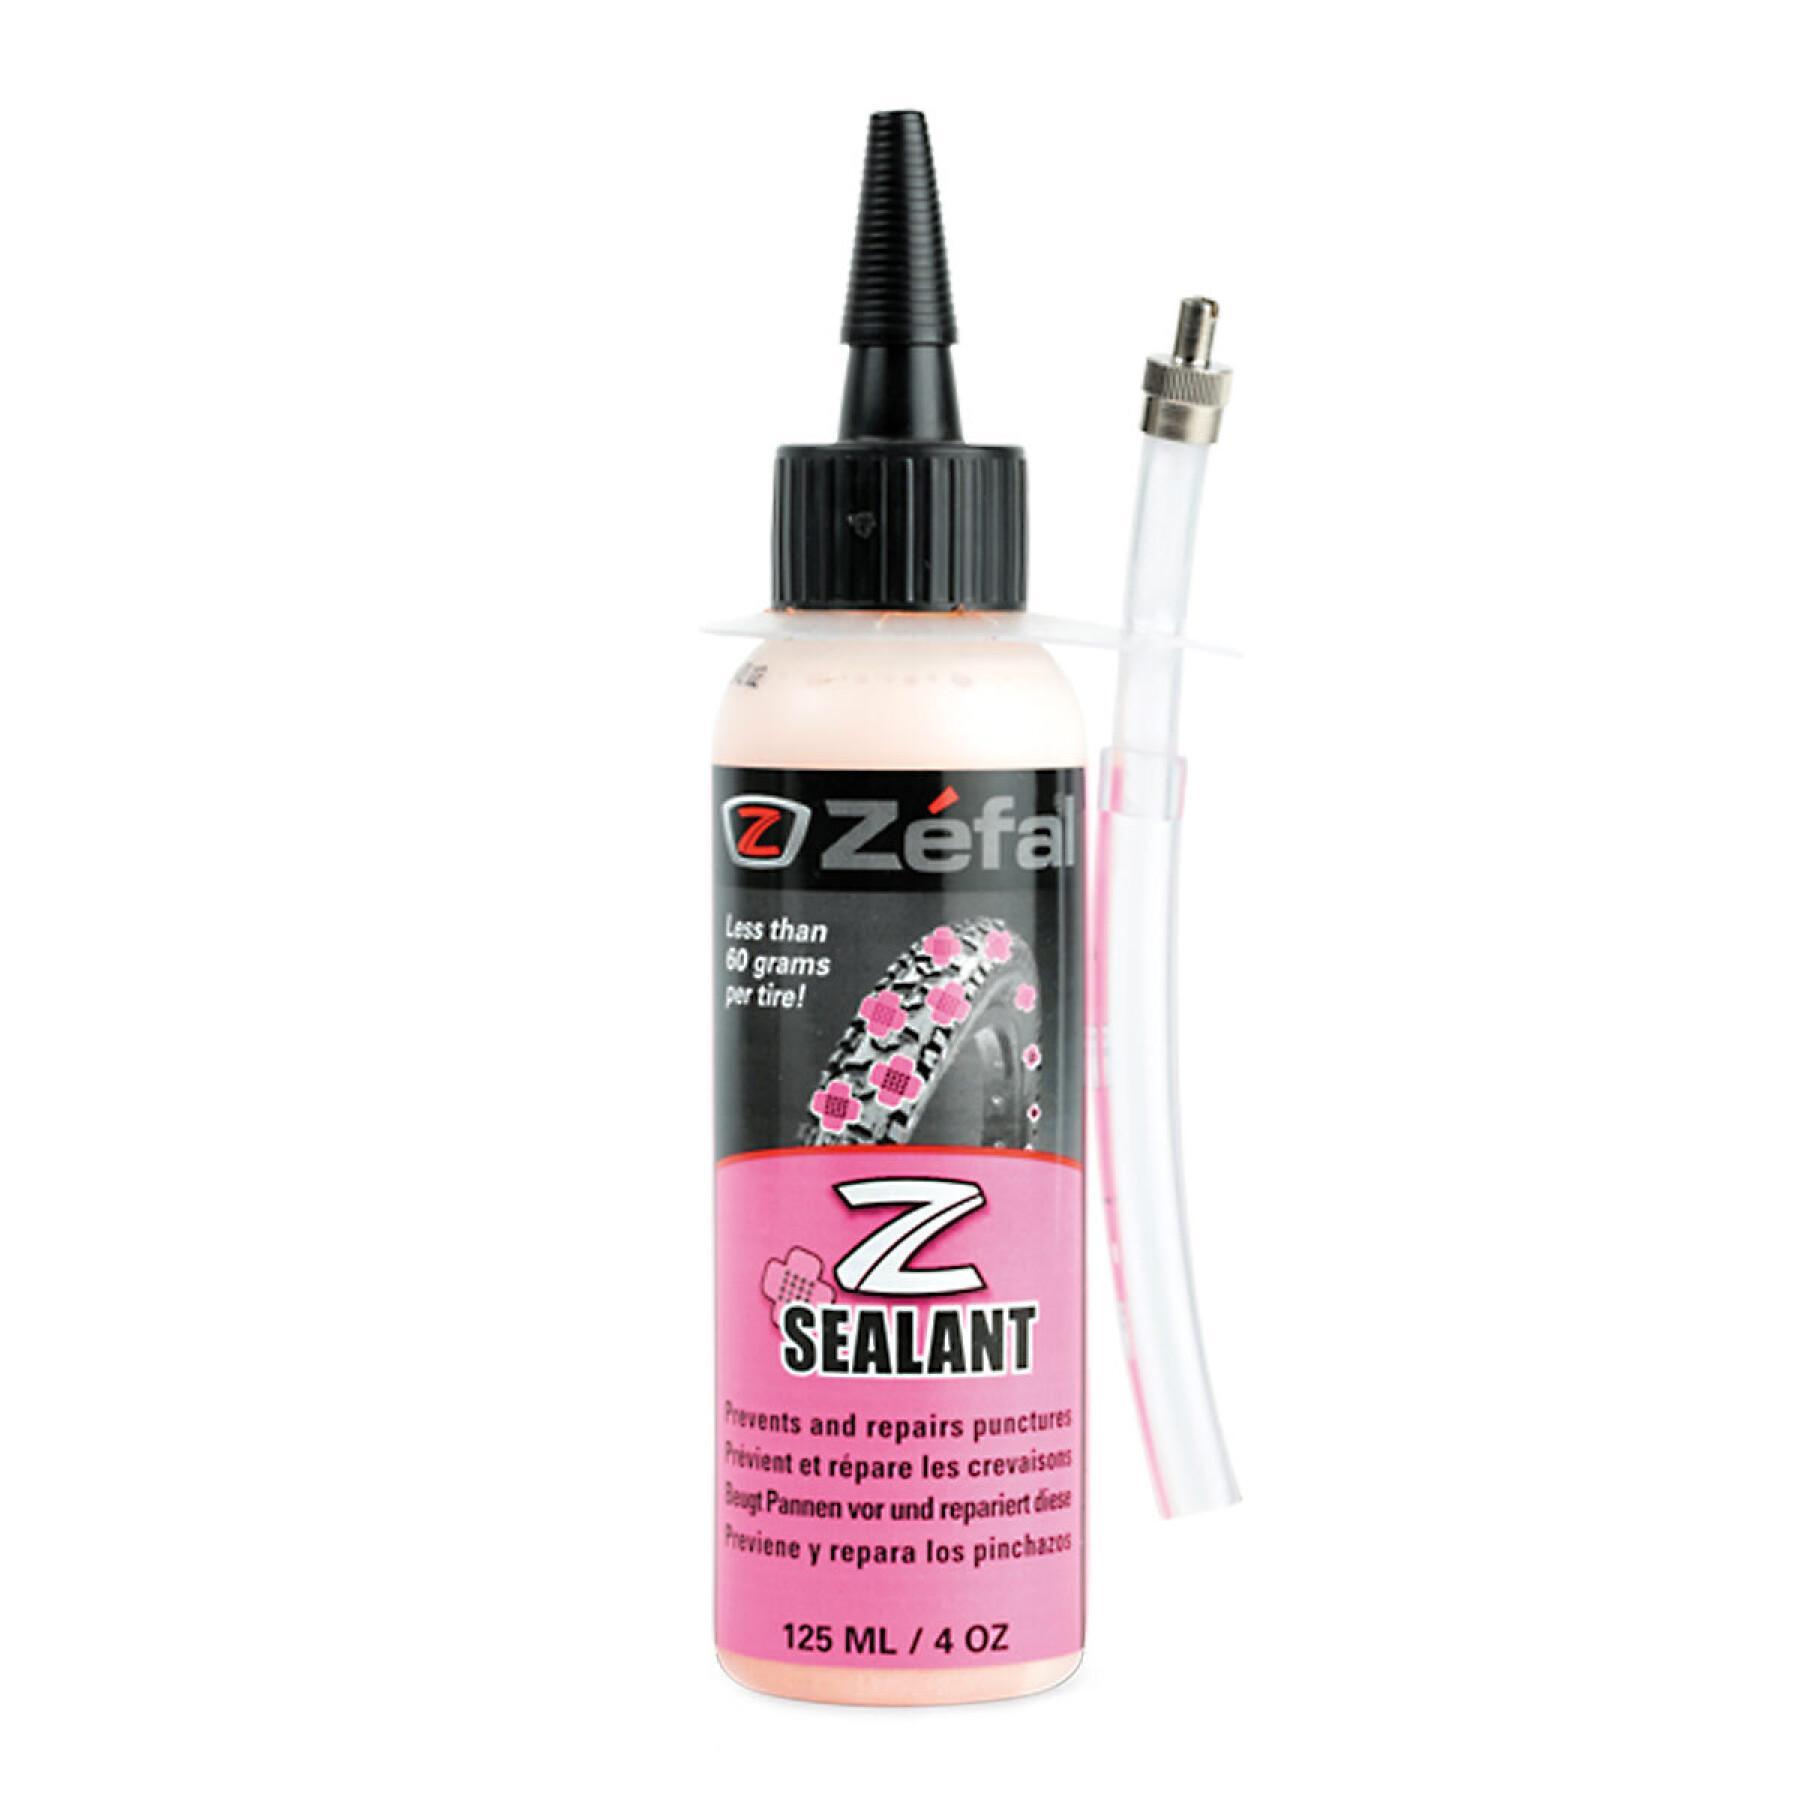 Liquido anti-puntura z-sealant Zefal 125 ml